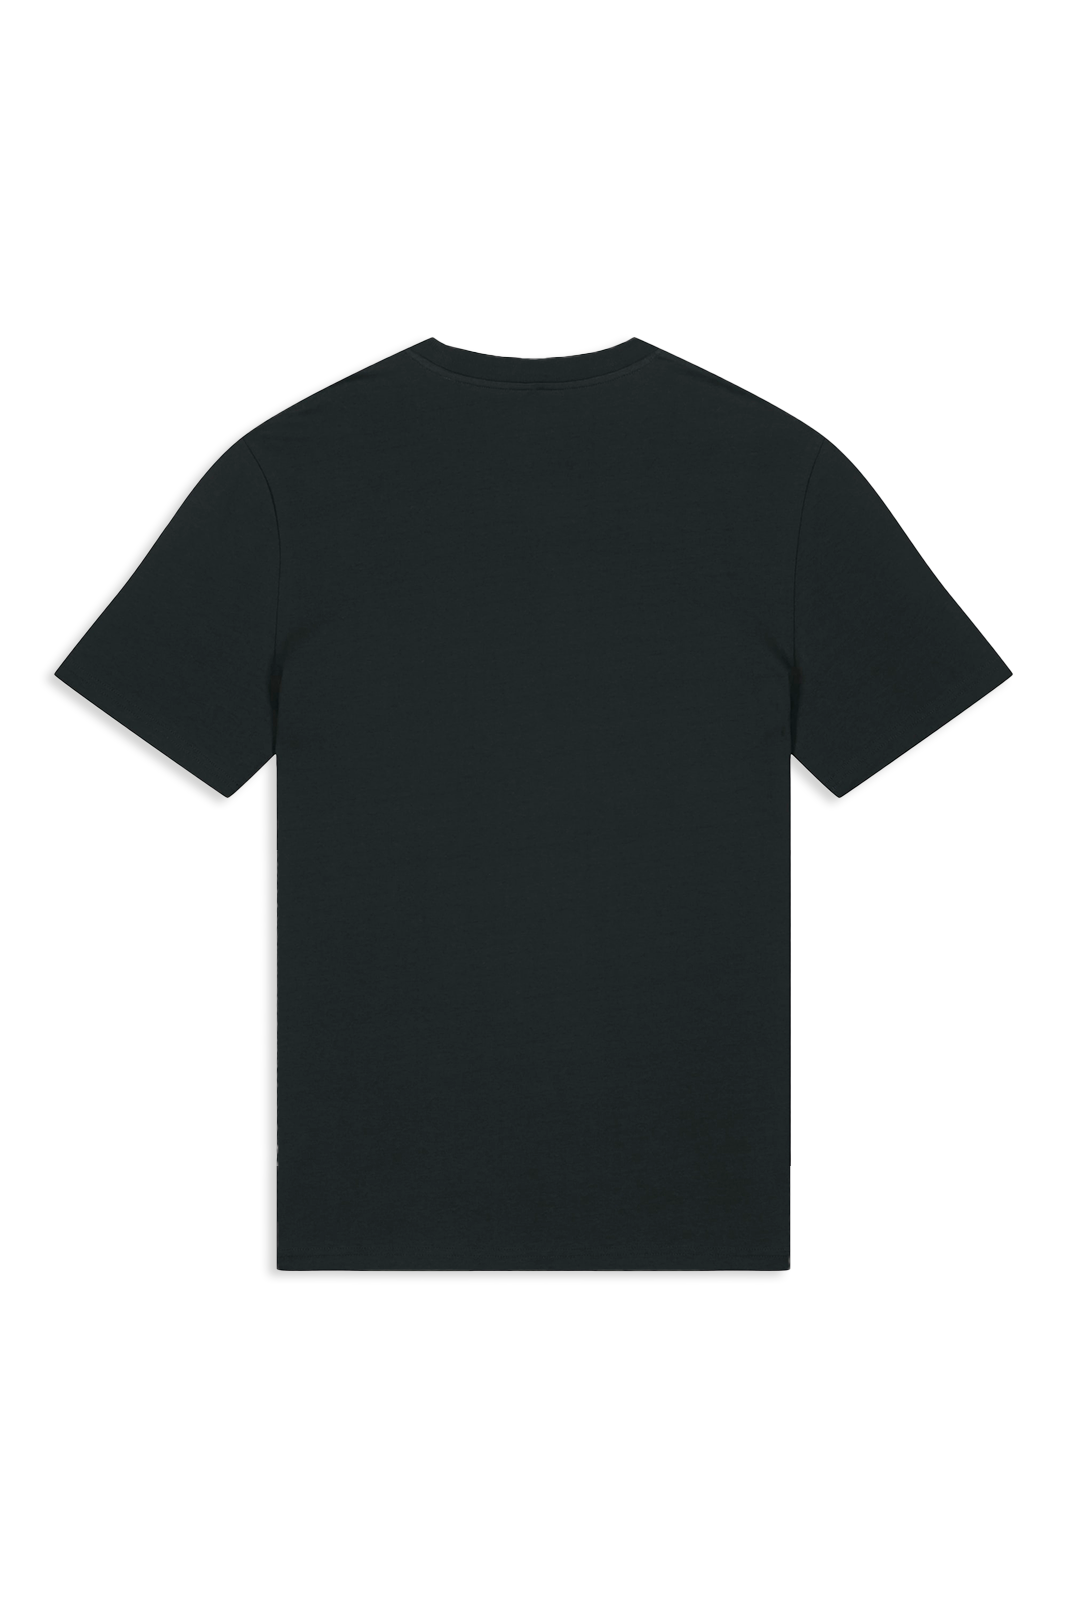 T-Shirt - Lurchworld (Black)